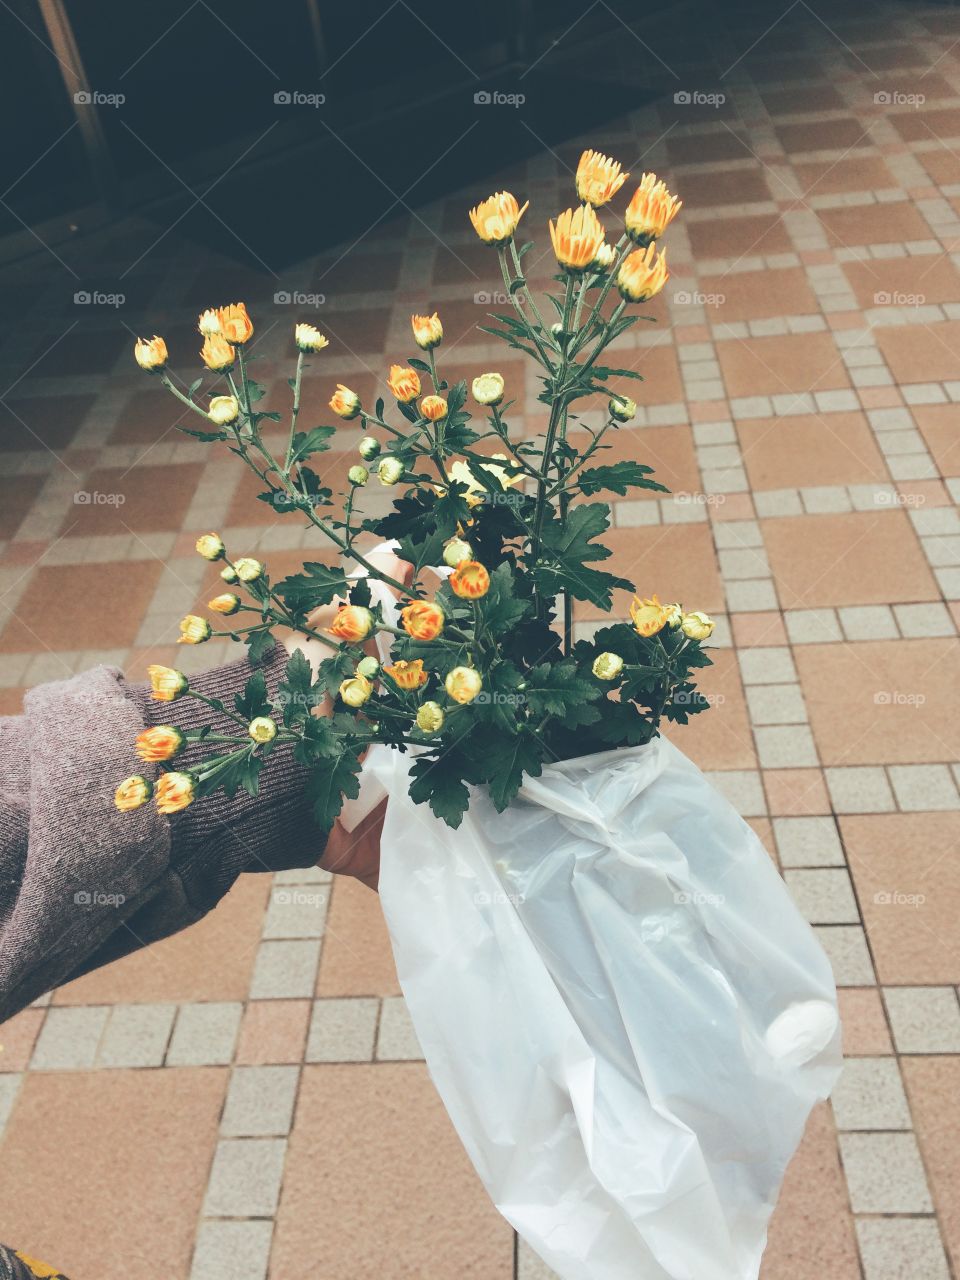 Fresh cut flowers in a plastic bag